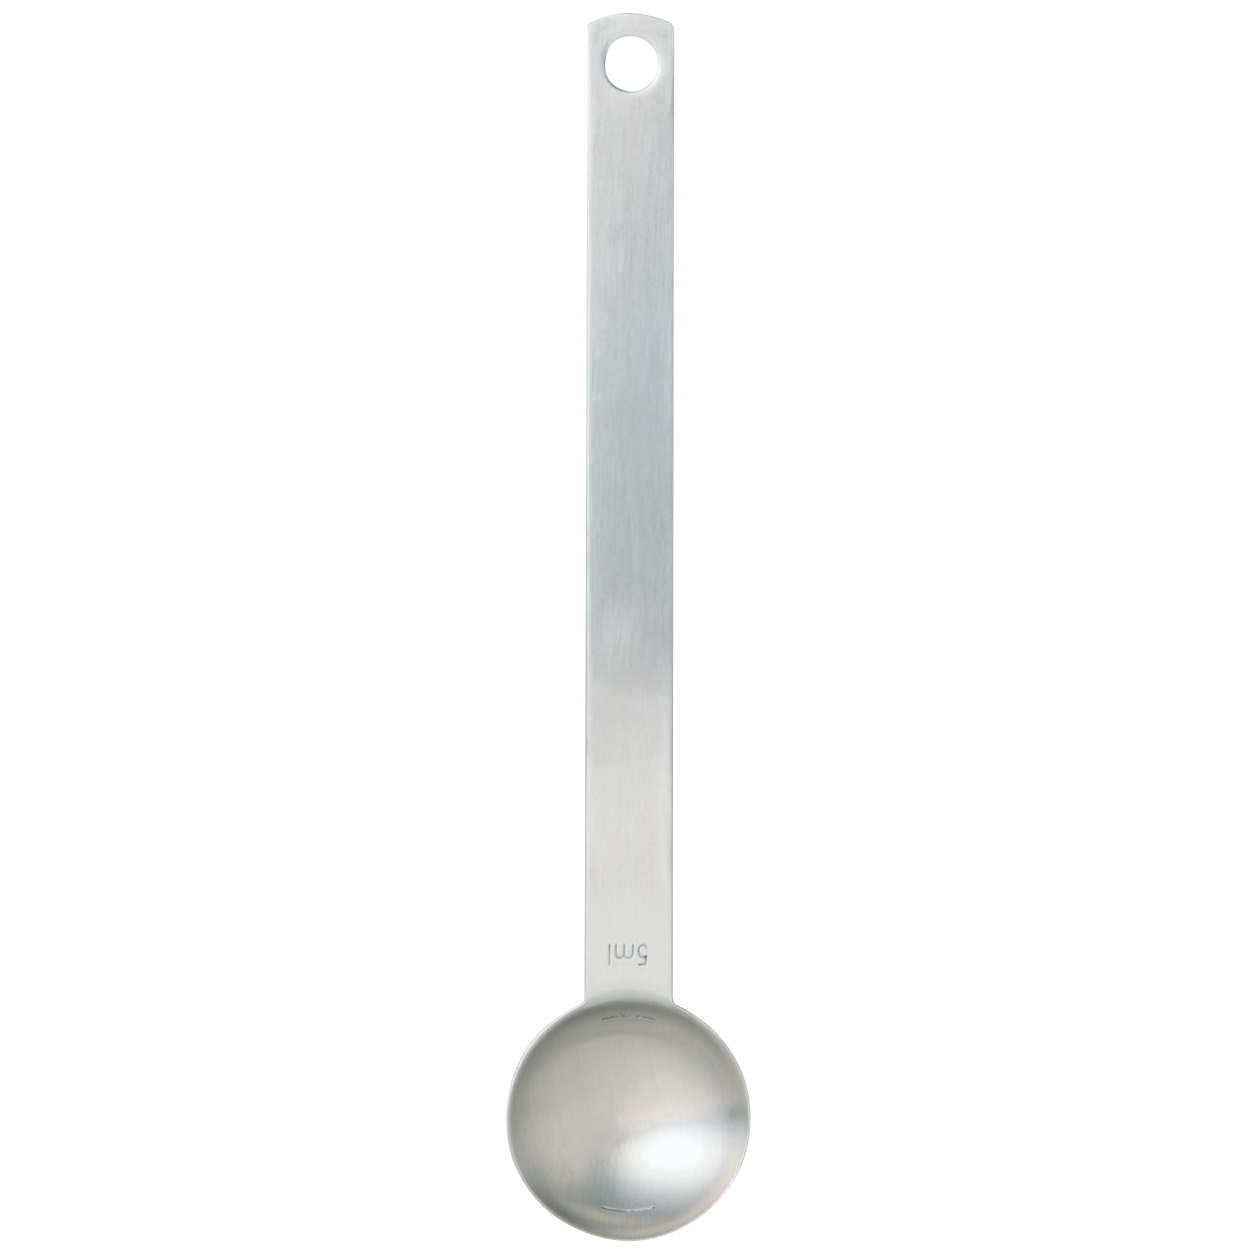 Long Measure Spoon - 5ml